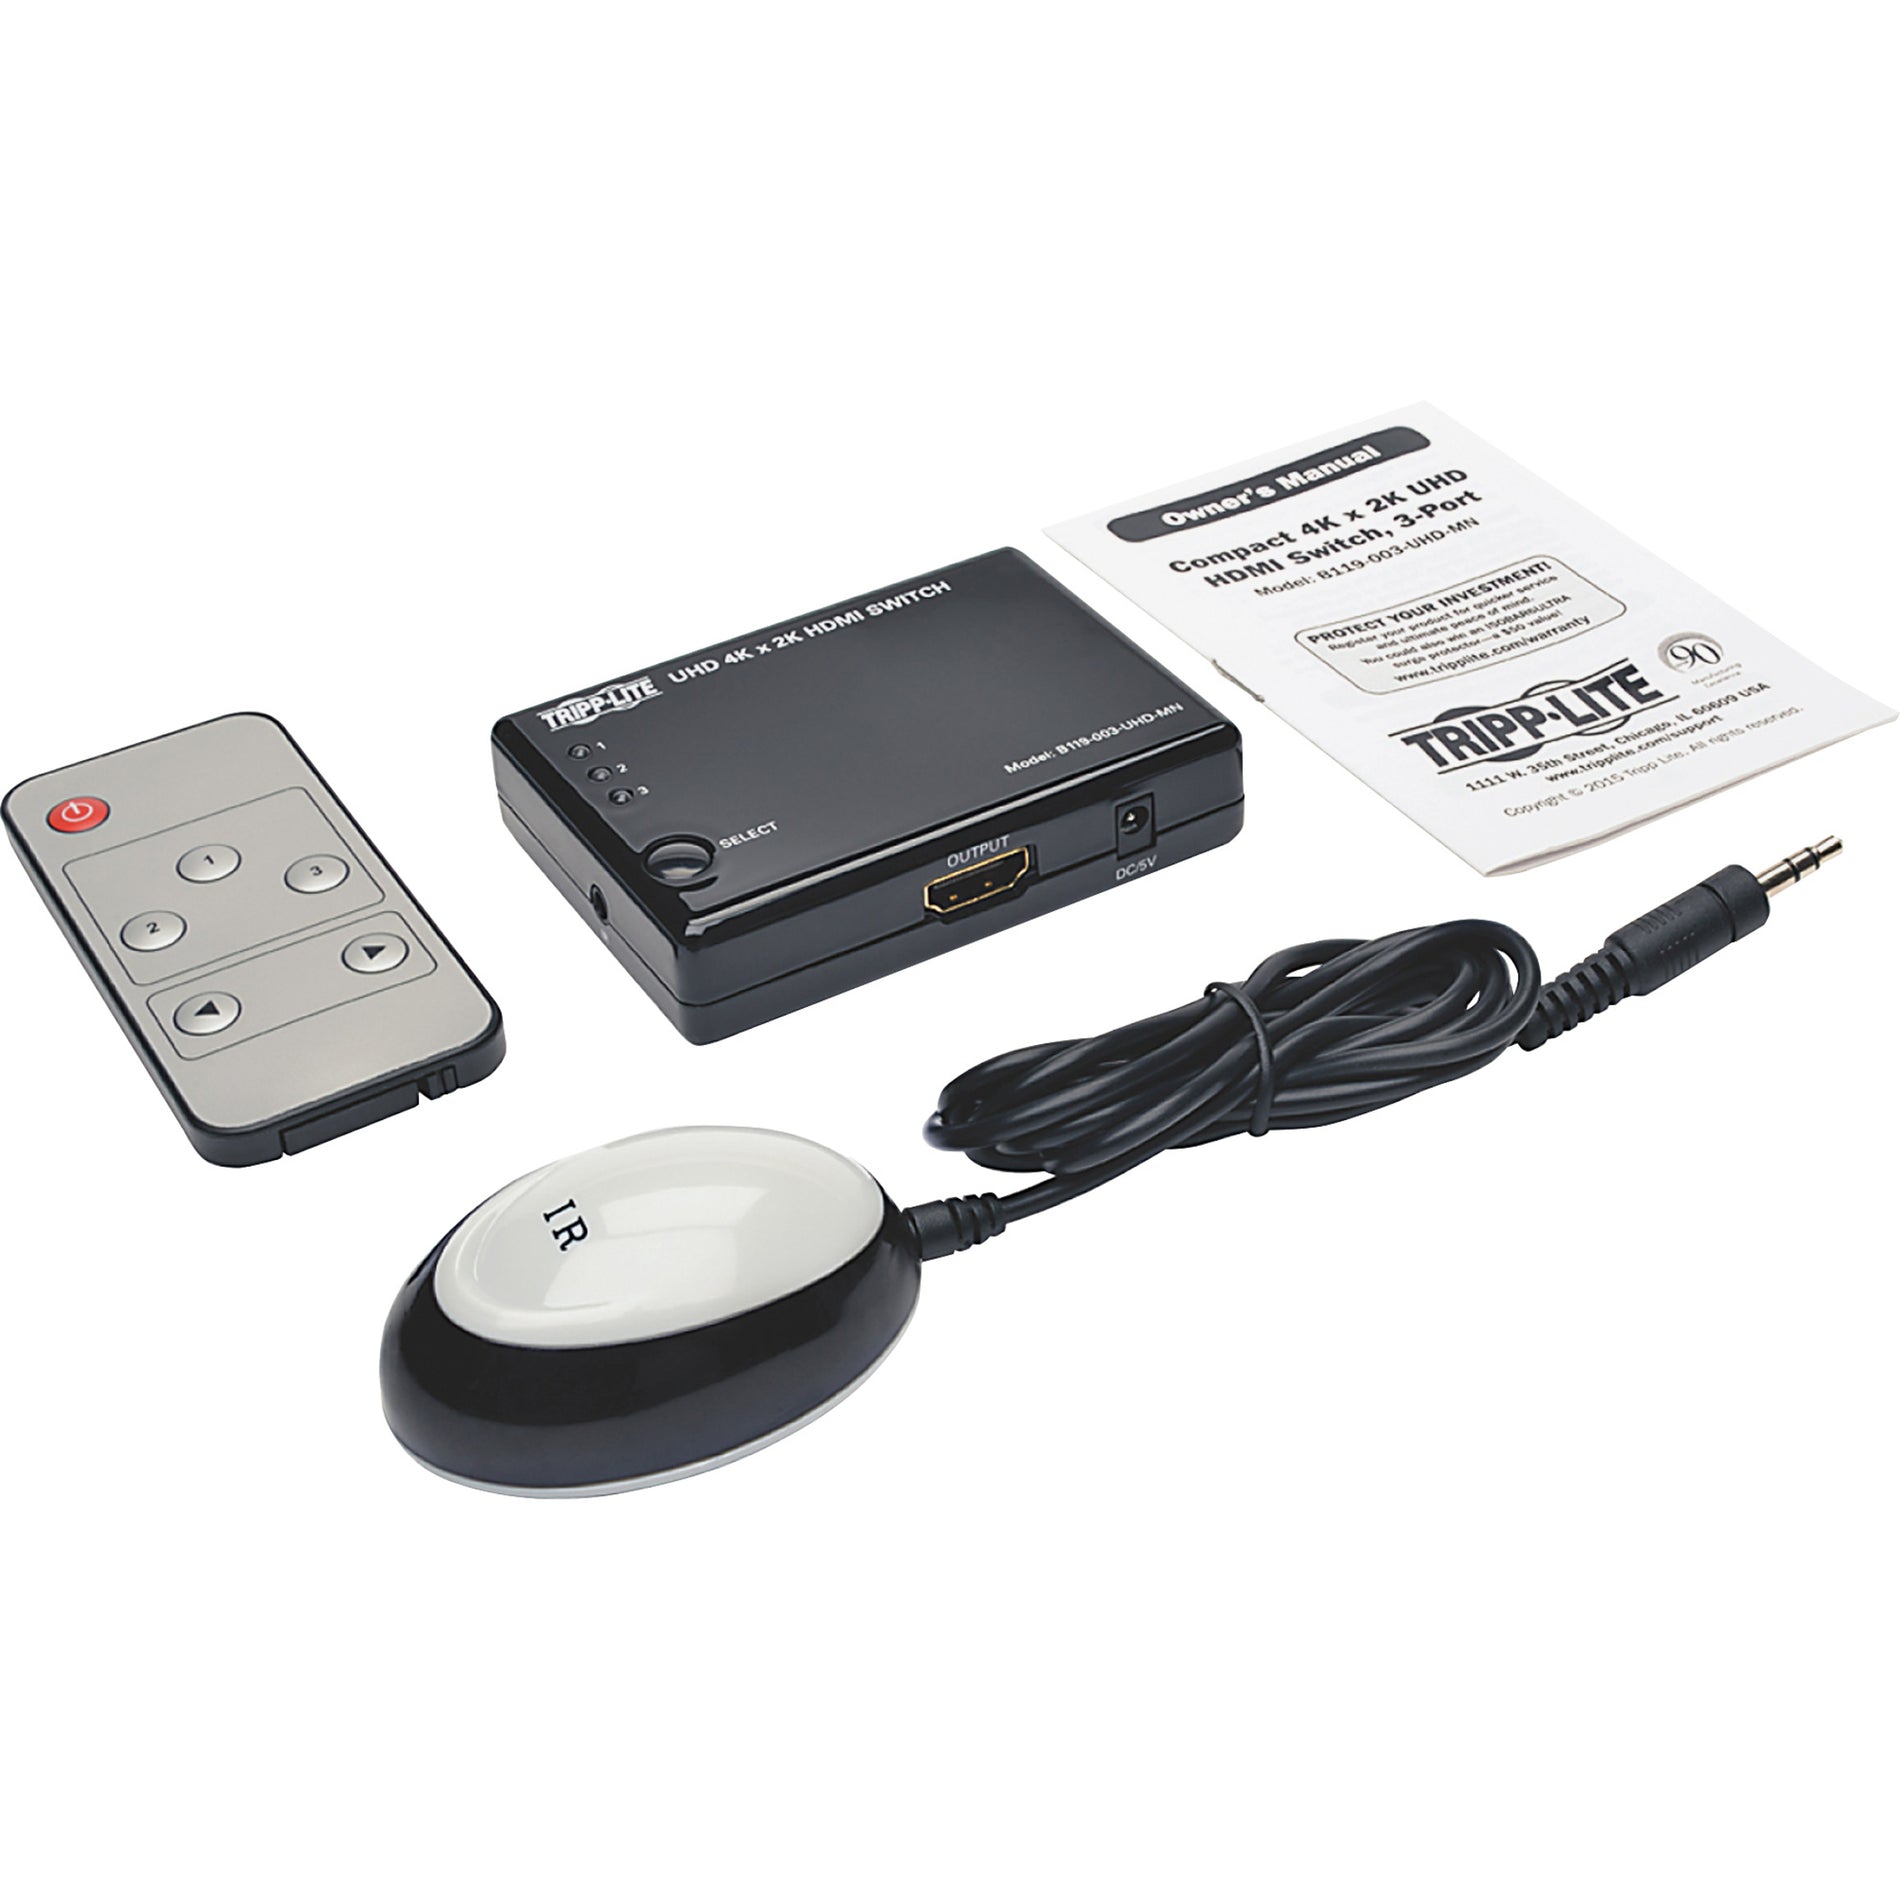 Tripp Lite B119-003-UHD-MN 3-Port HDMI Mini Switch, Black - 4K Video, Remote Control